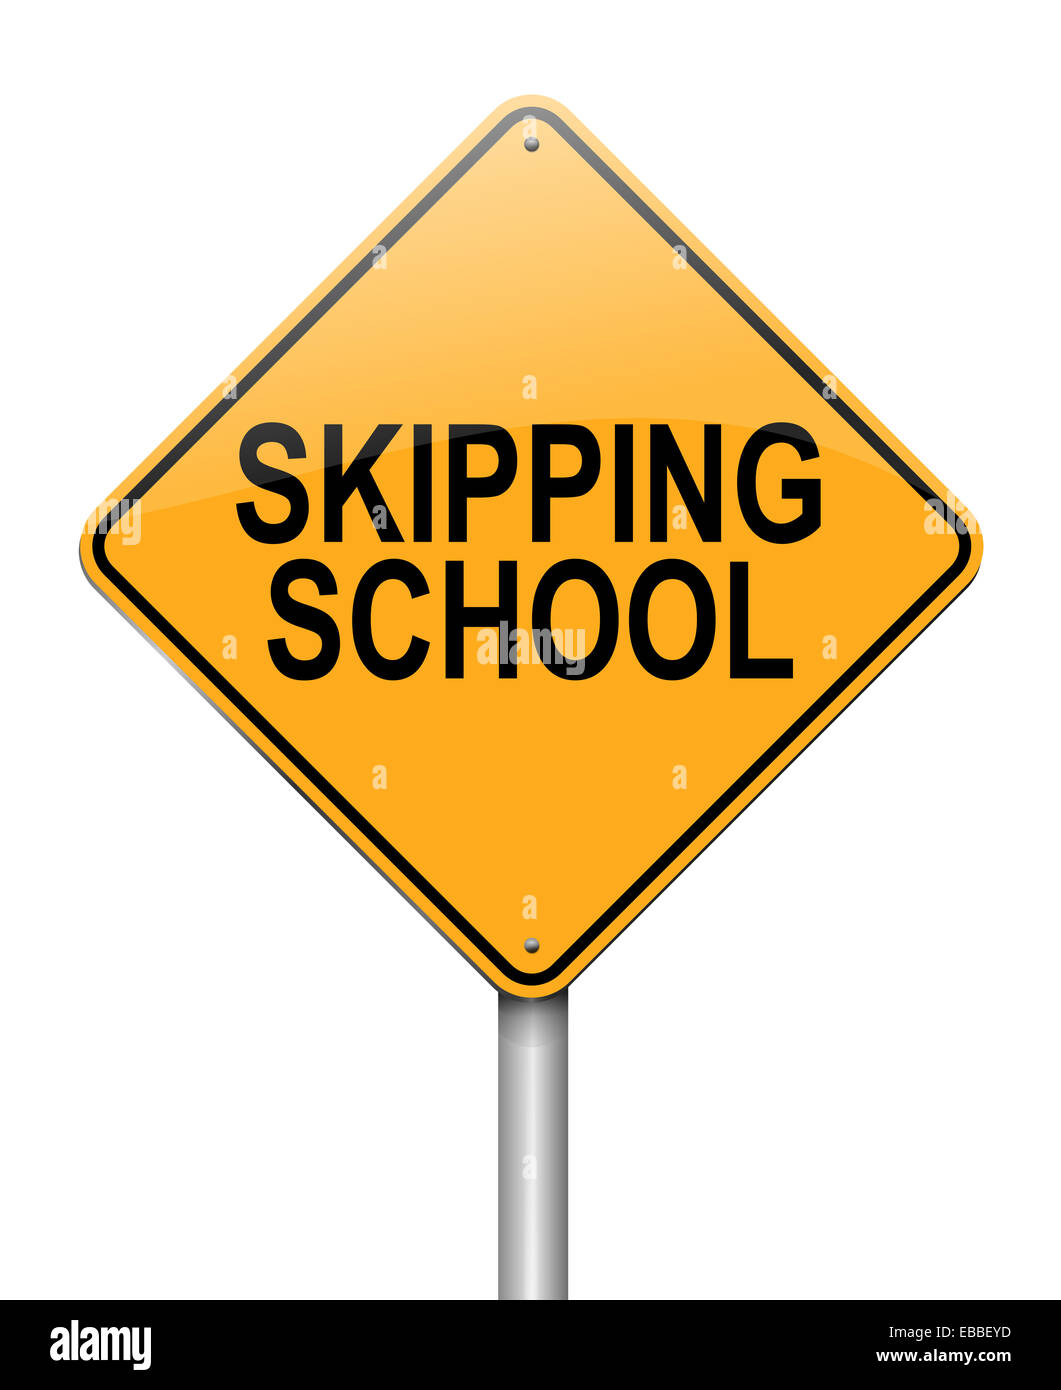 Skipping school concept. Stock Photo